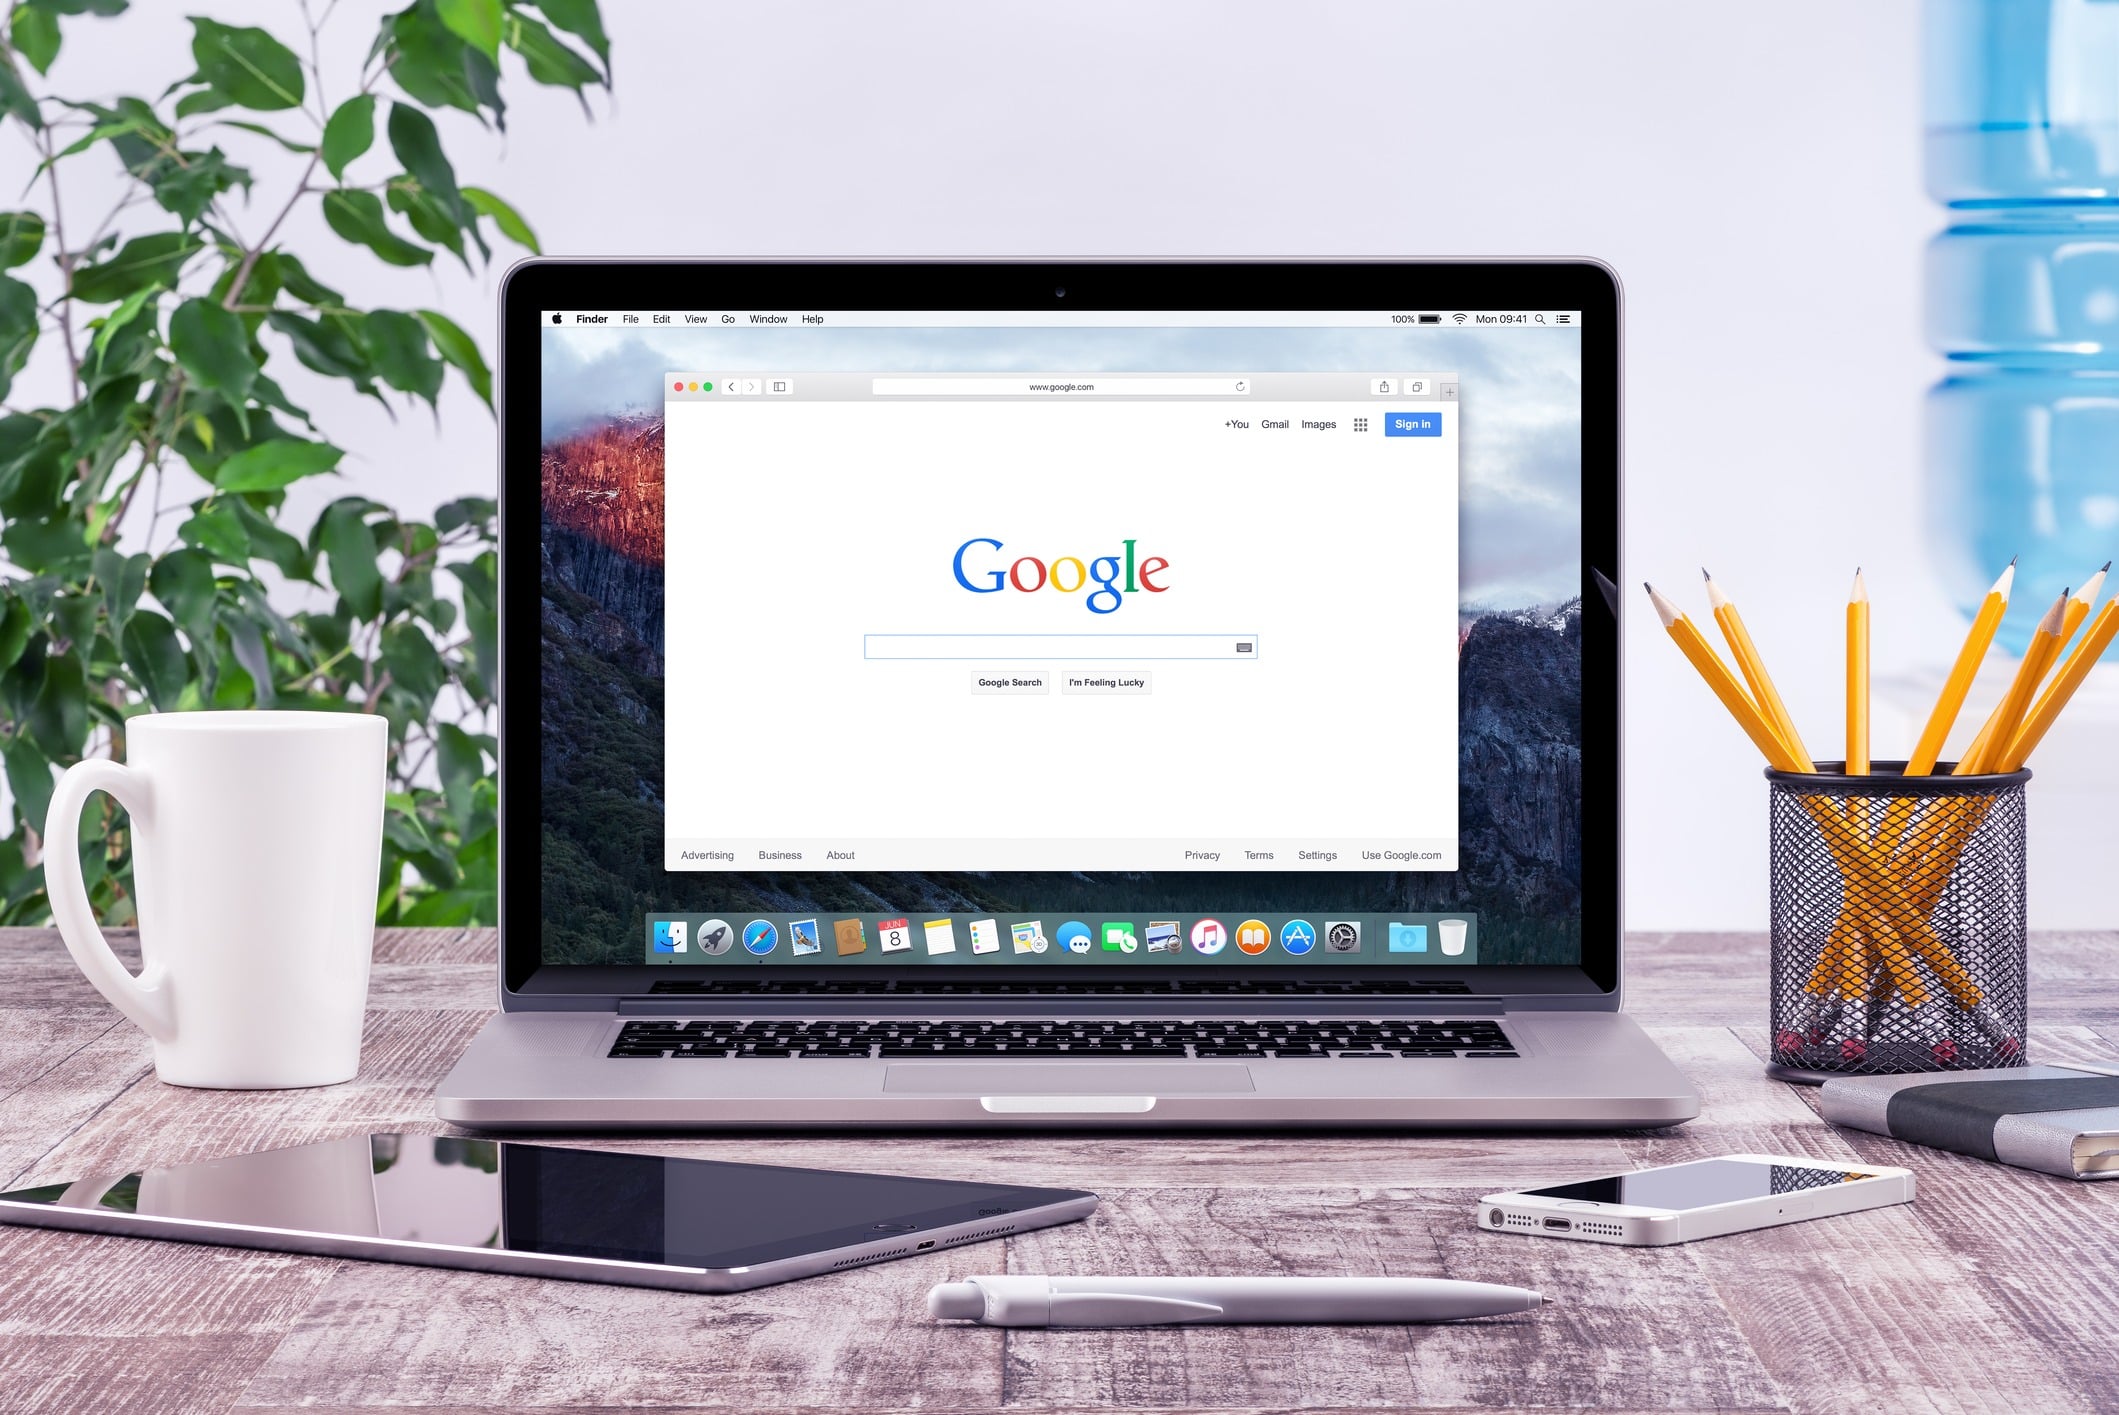 Mac OS computer displaying Google search